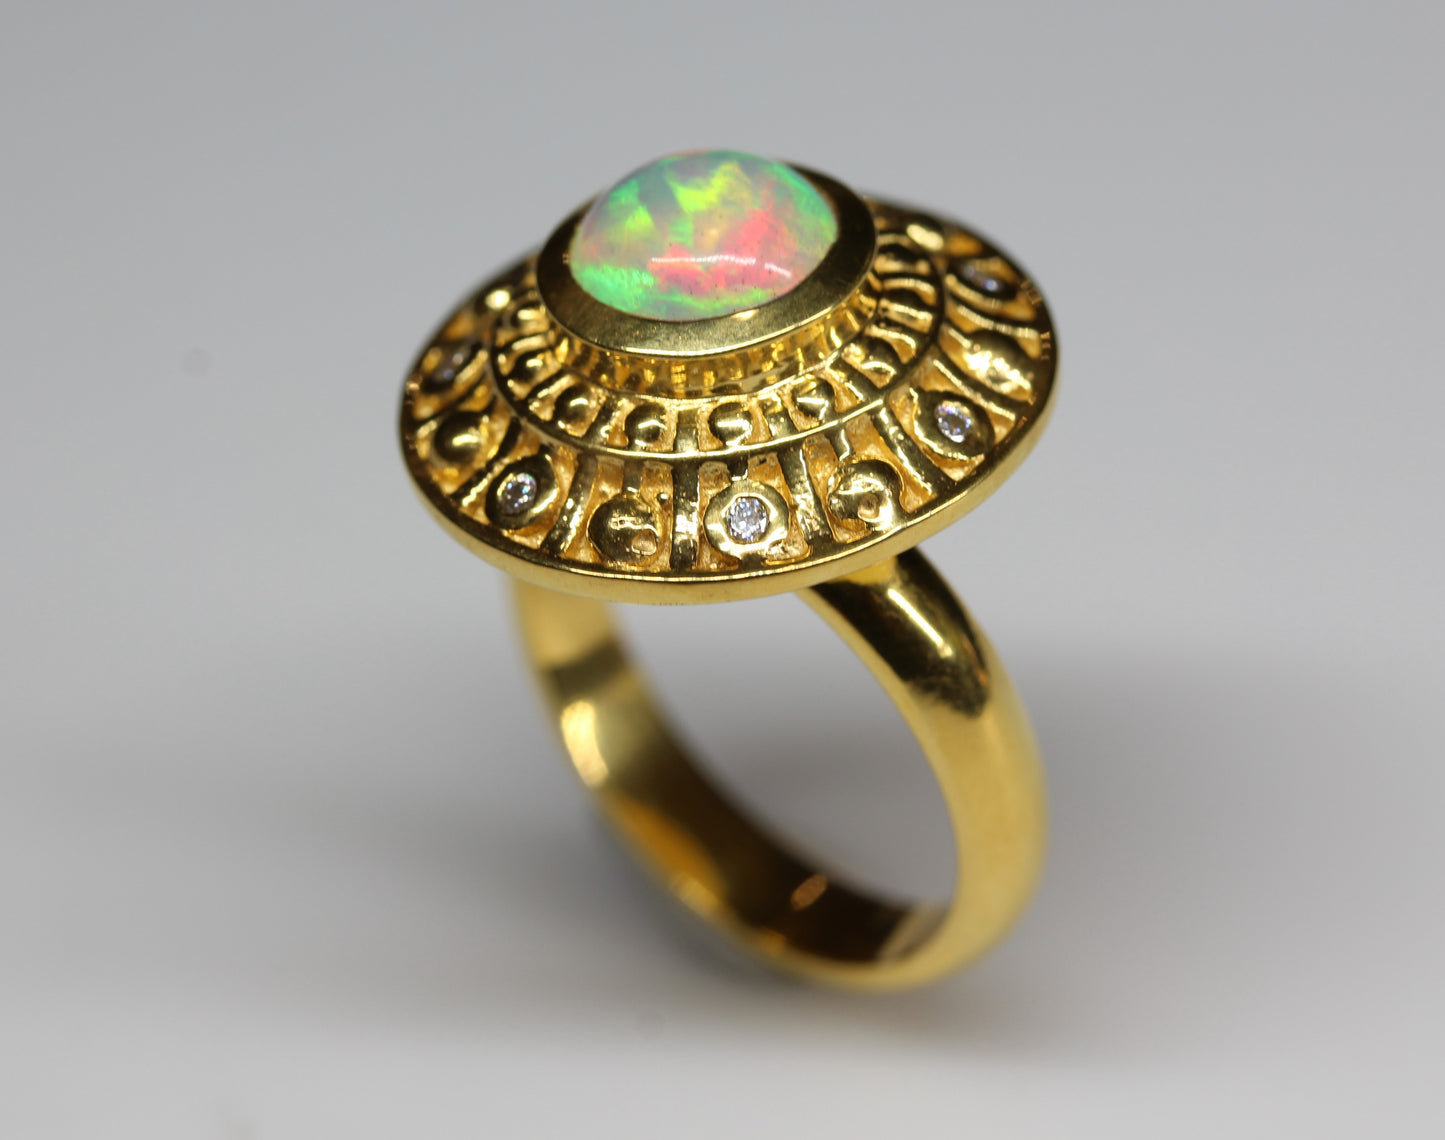 Natural Opal Medallion Ring - 24k Gold Plated - Adjustable Size #294